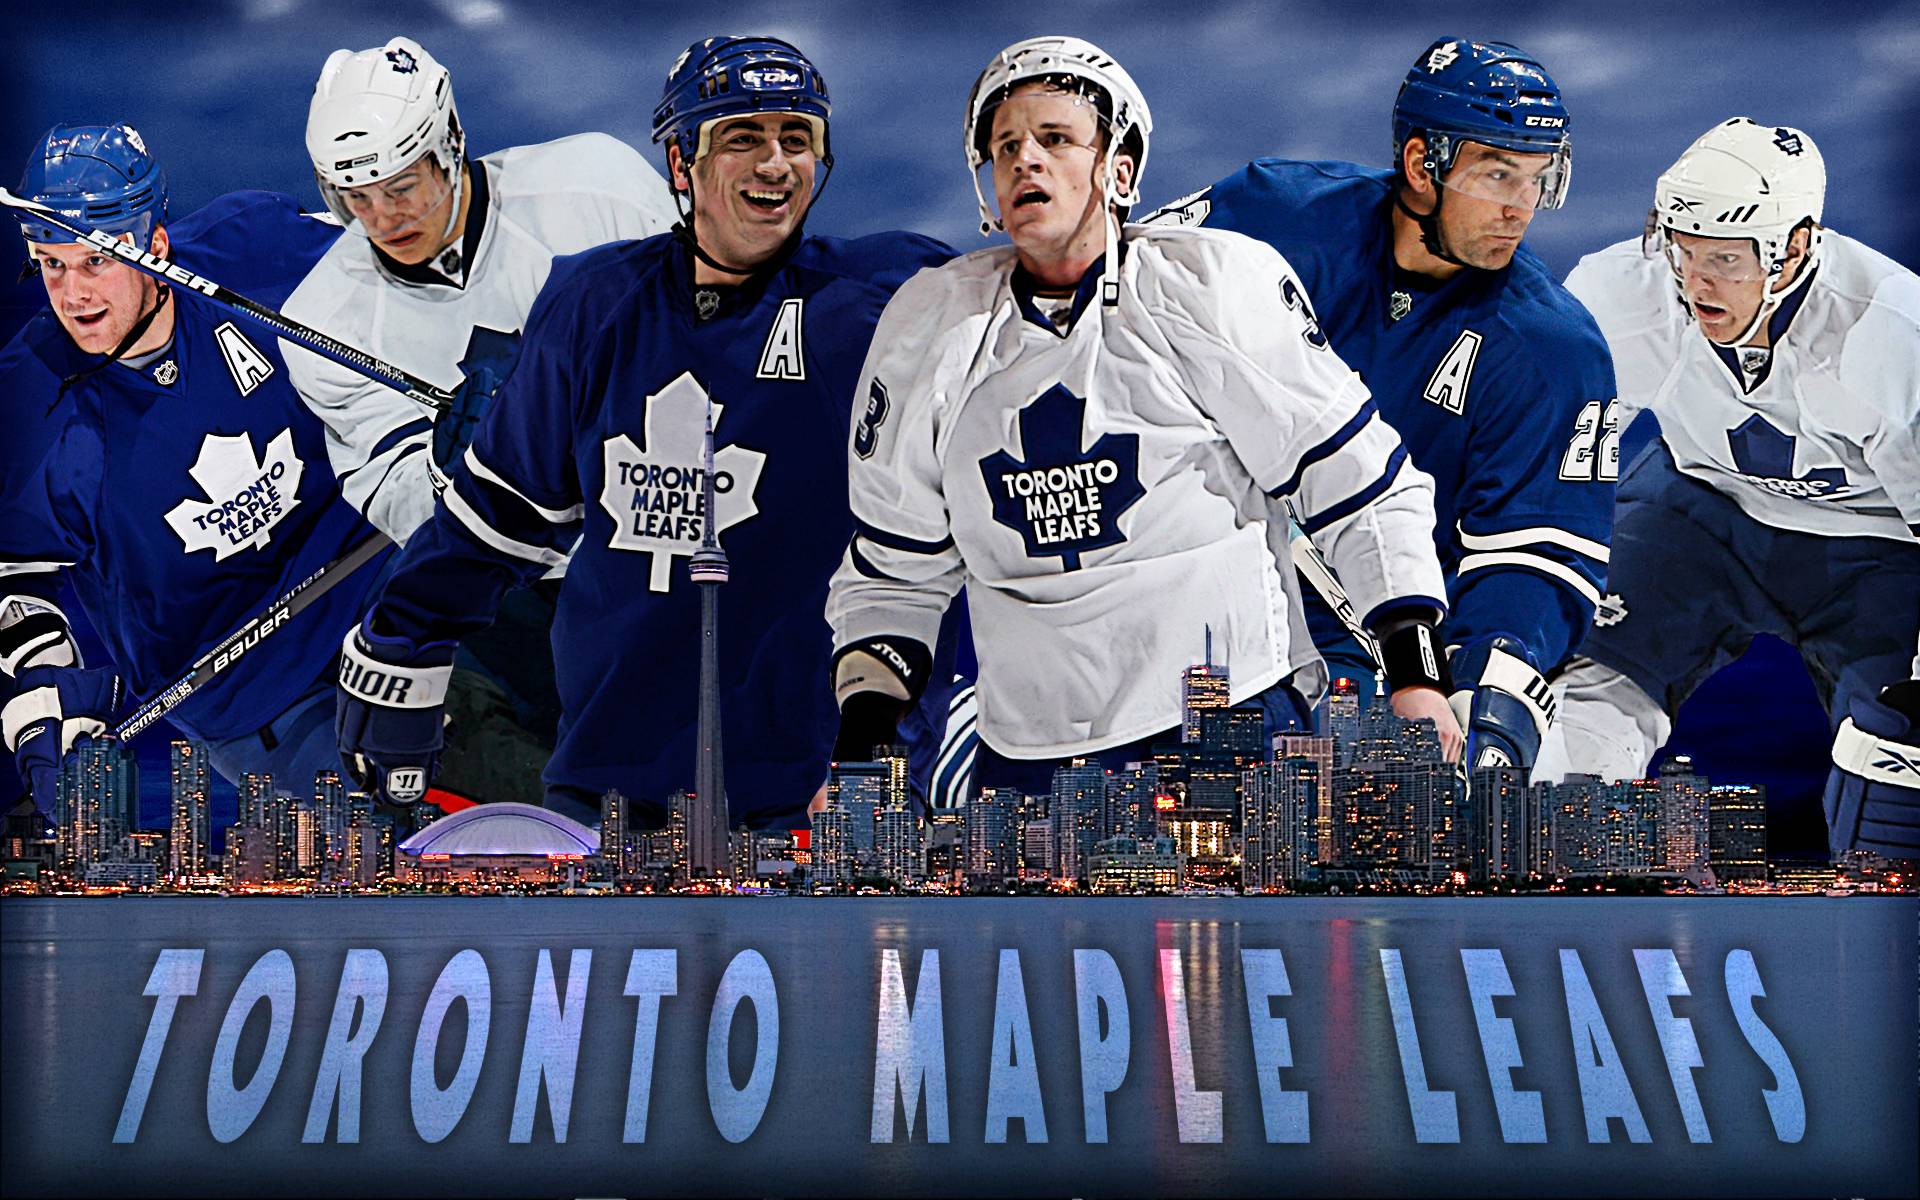 Free Toronto Maple Leafs desktop wallpaper. Toronto Maple Leafs